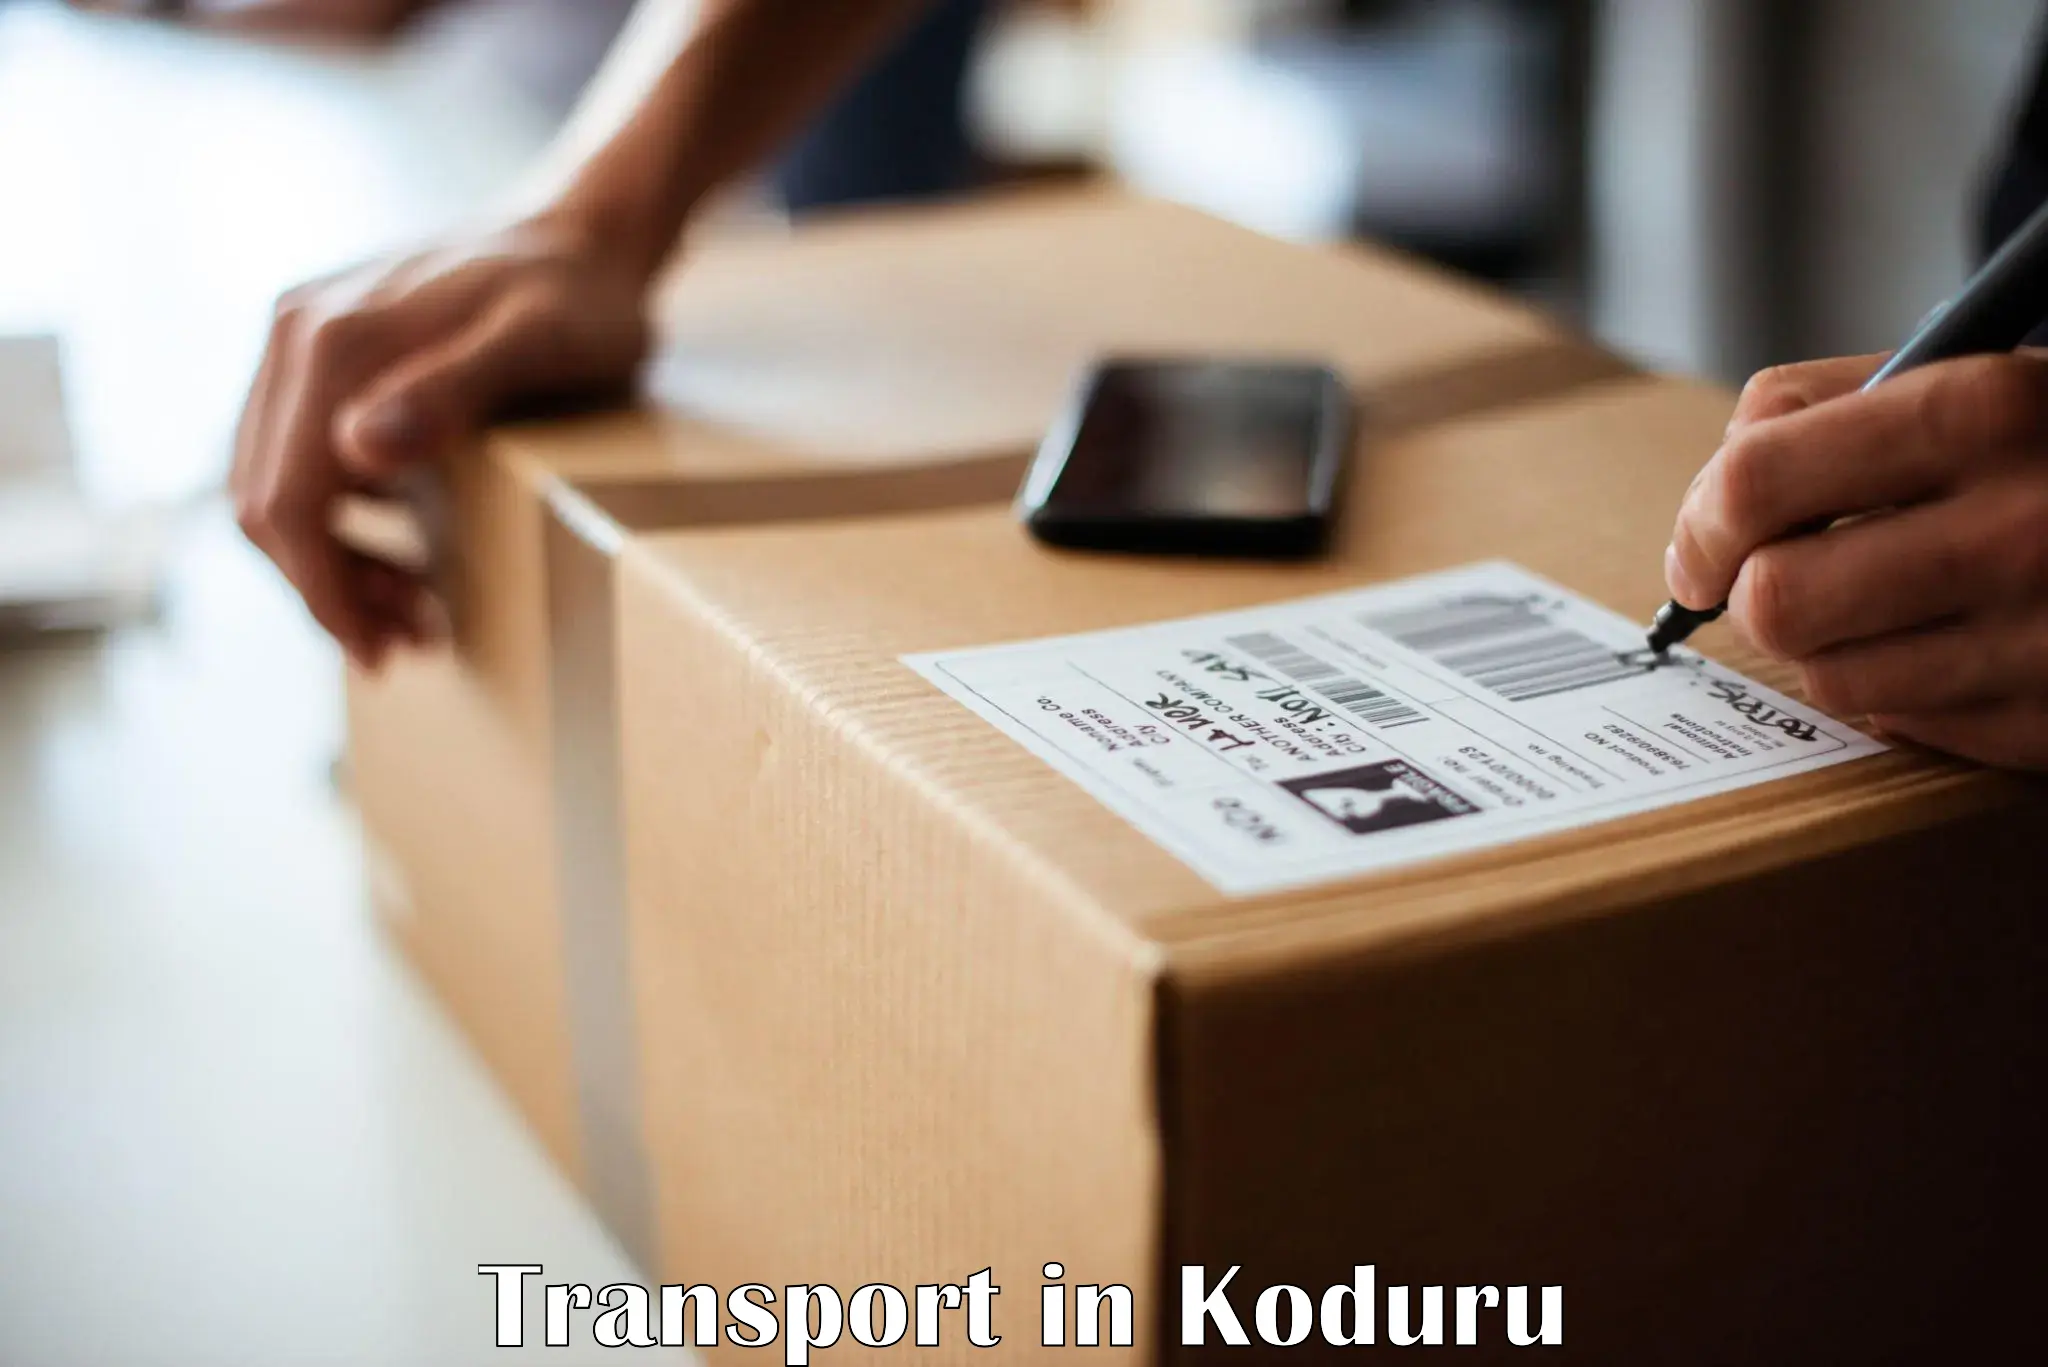 Transportation services in Koduru